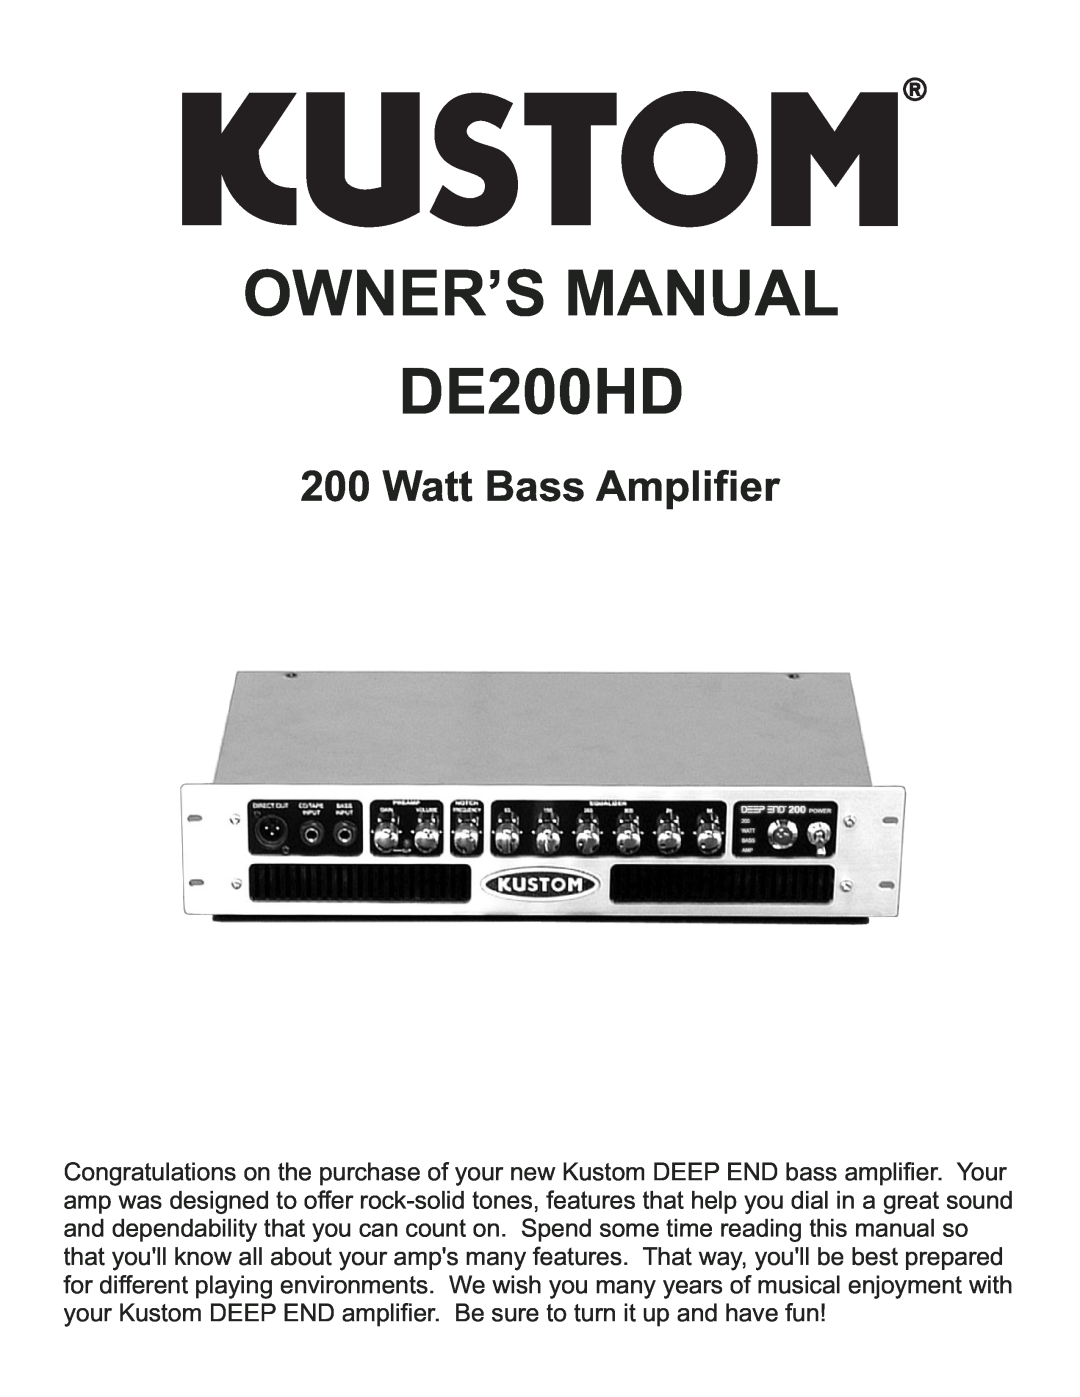 Kustom DE200HD owner manual Owner’S Manual, Watt Bass Amplifier 